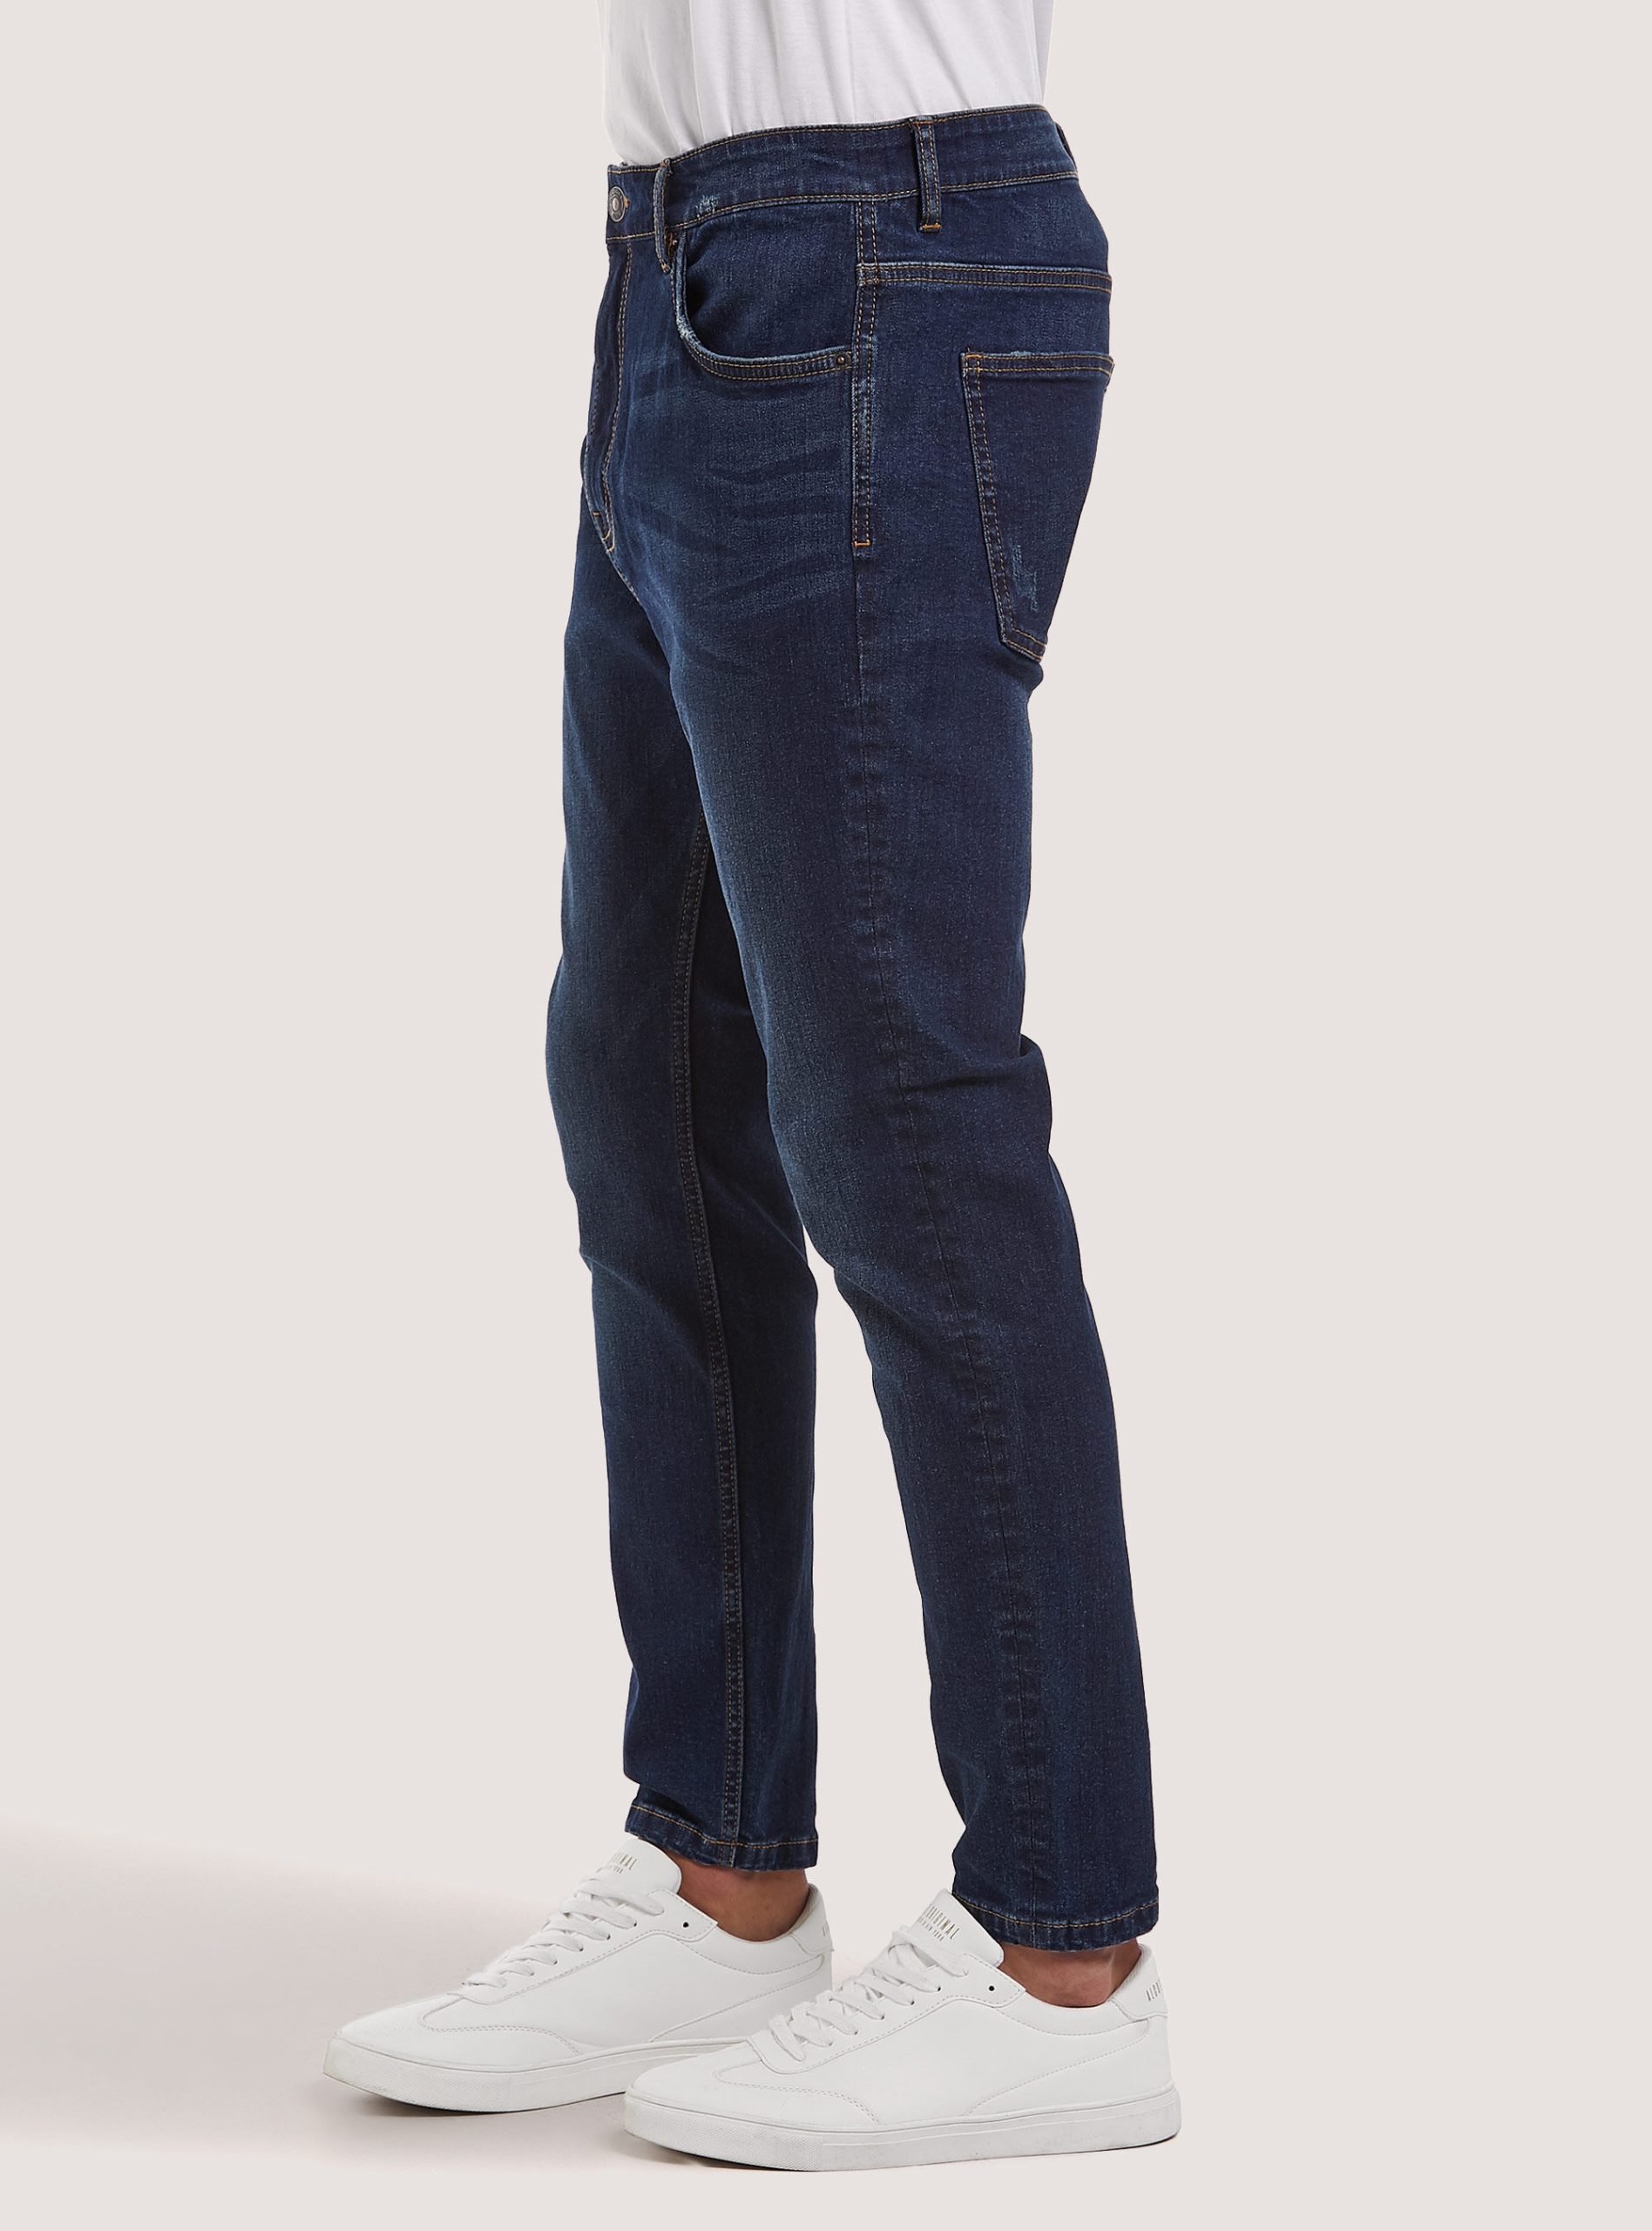 Alcott Stretch Denim Carrot Fit Jeans D002 Medium Dark Blue Jeans Männer Tiefstpreis – 2